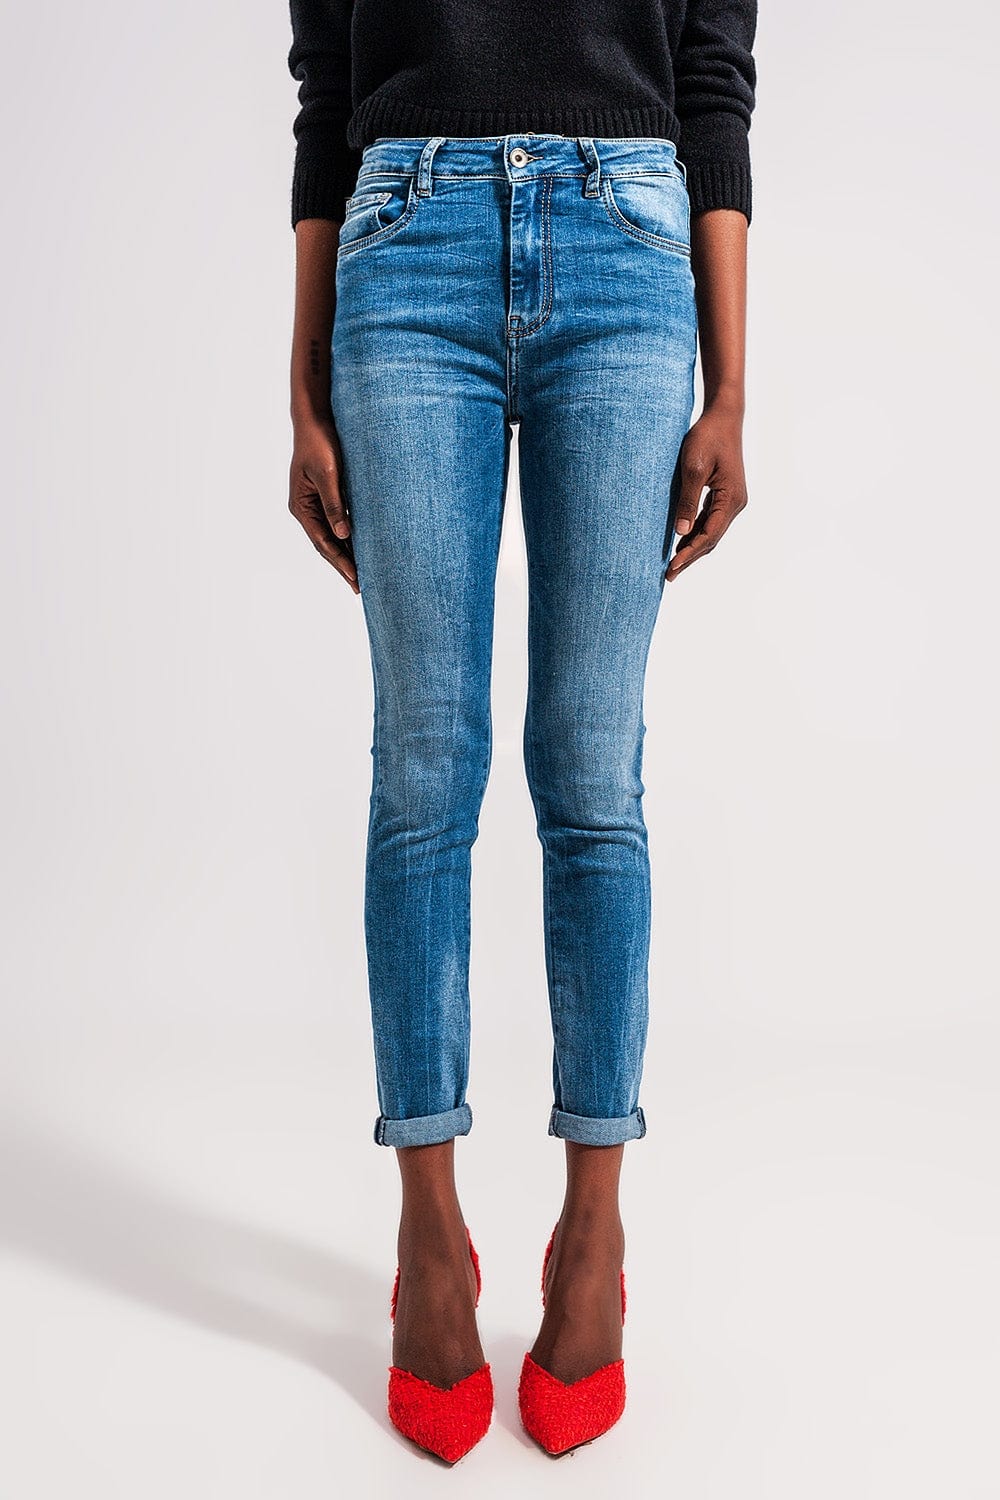 Q2 Women's Jean High Waist Elastic Skinny Jeans in Mid Blue